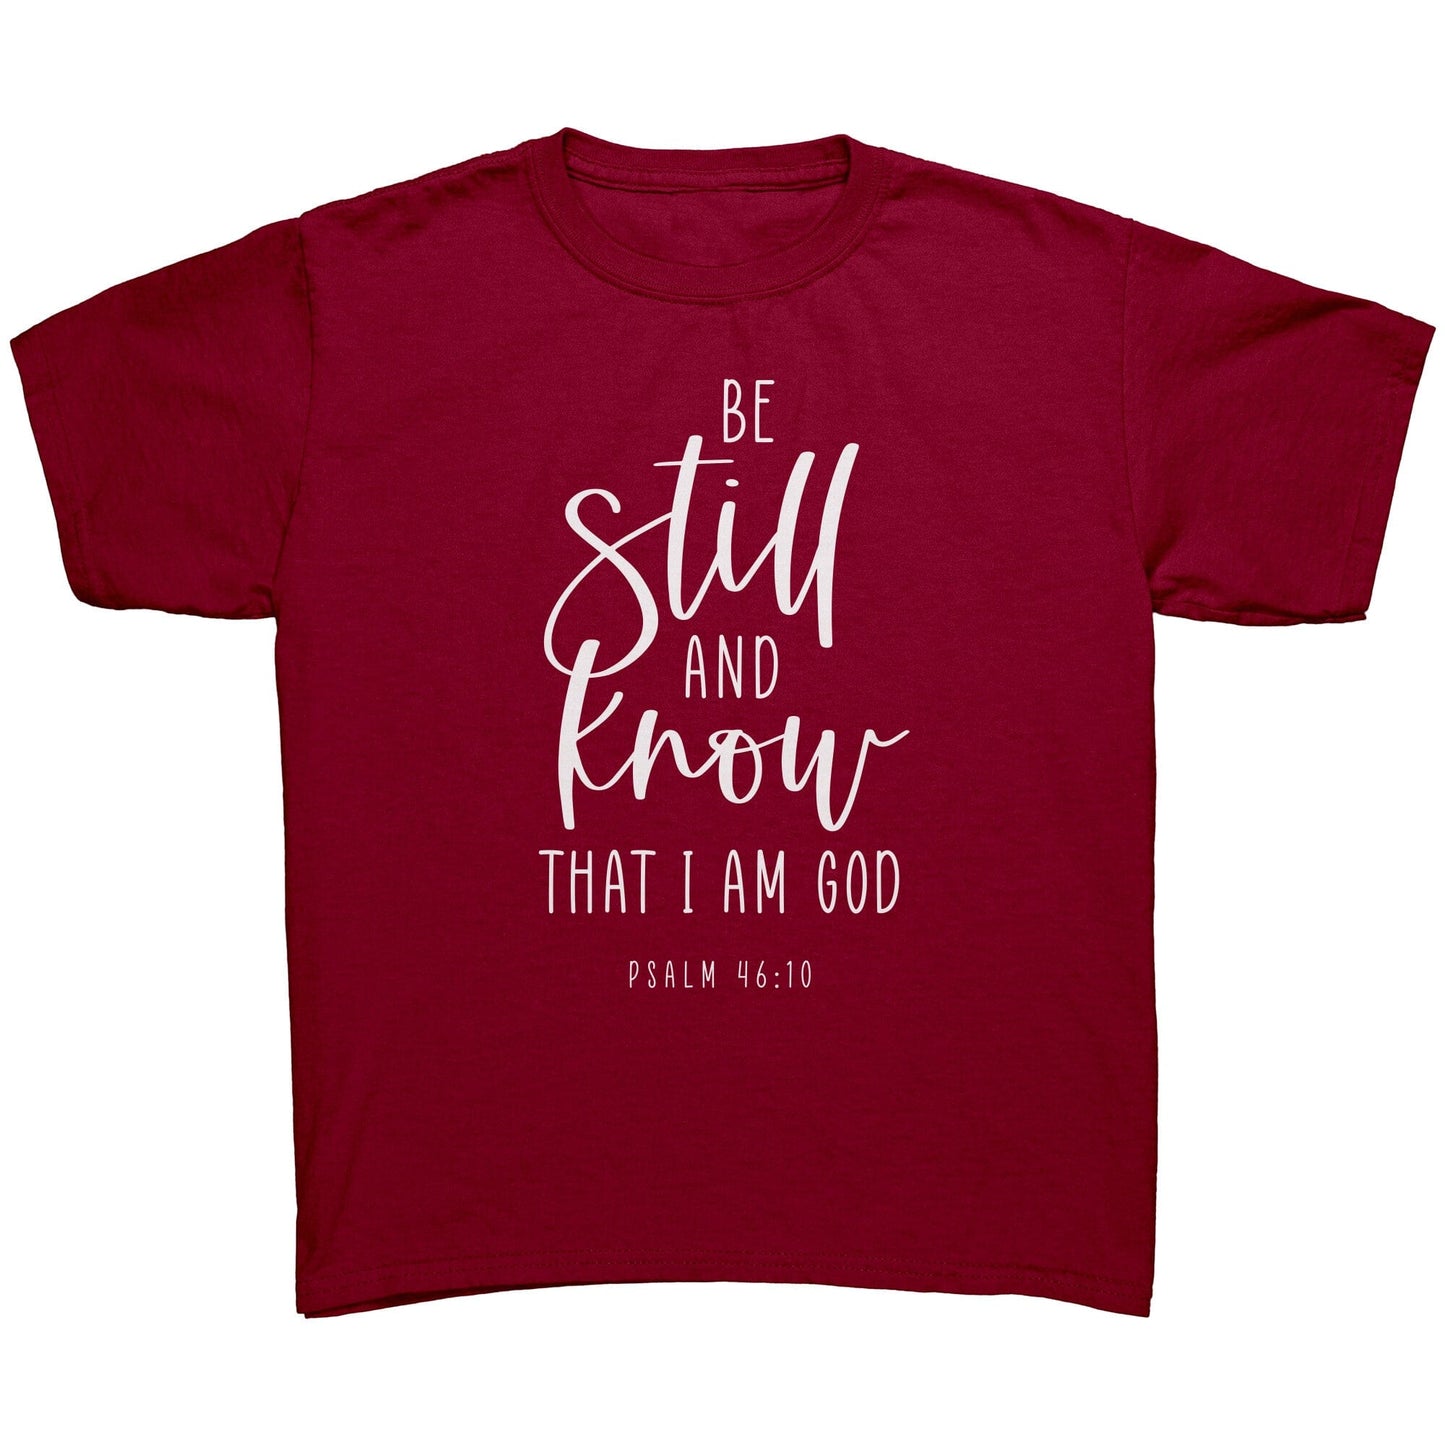 Psalm 46:10 Youth T-Shirt